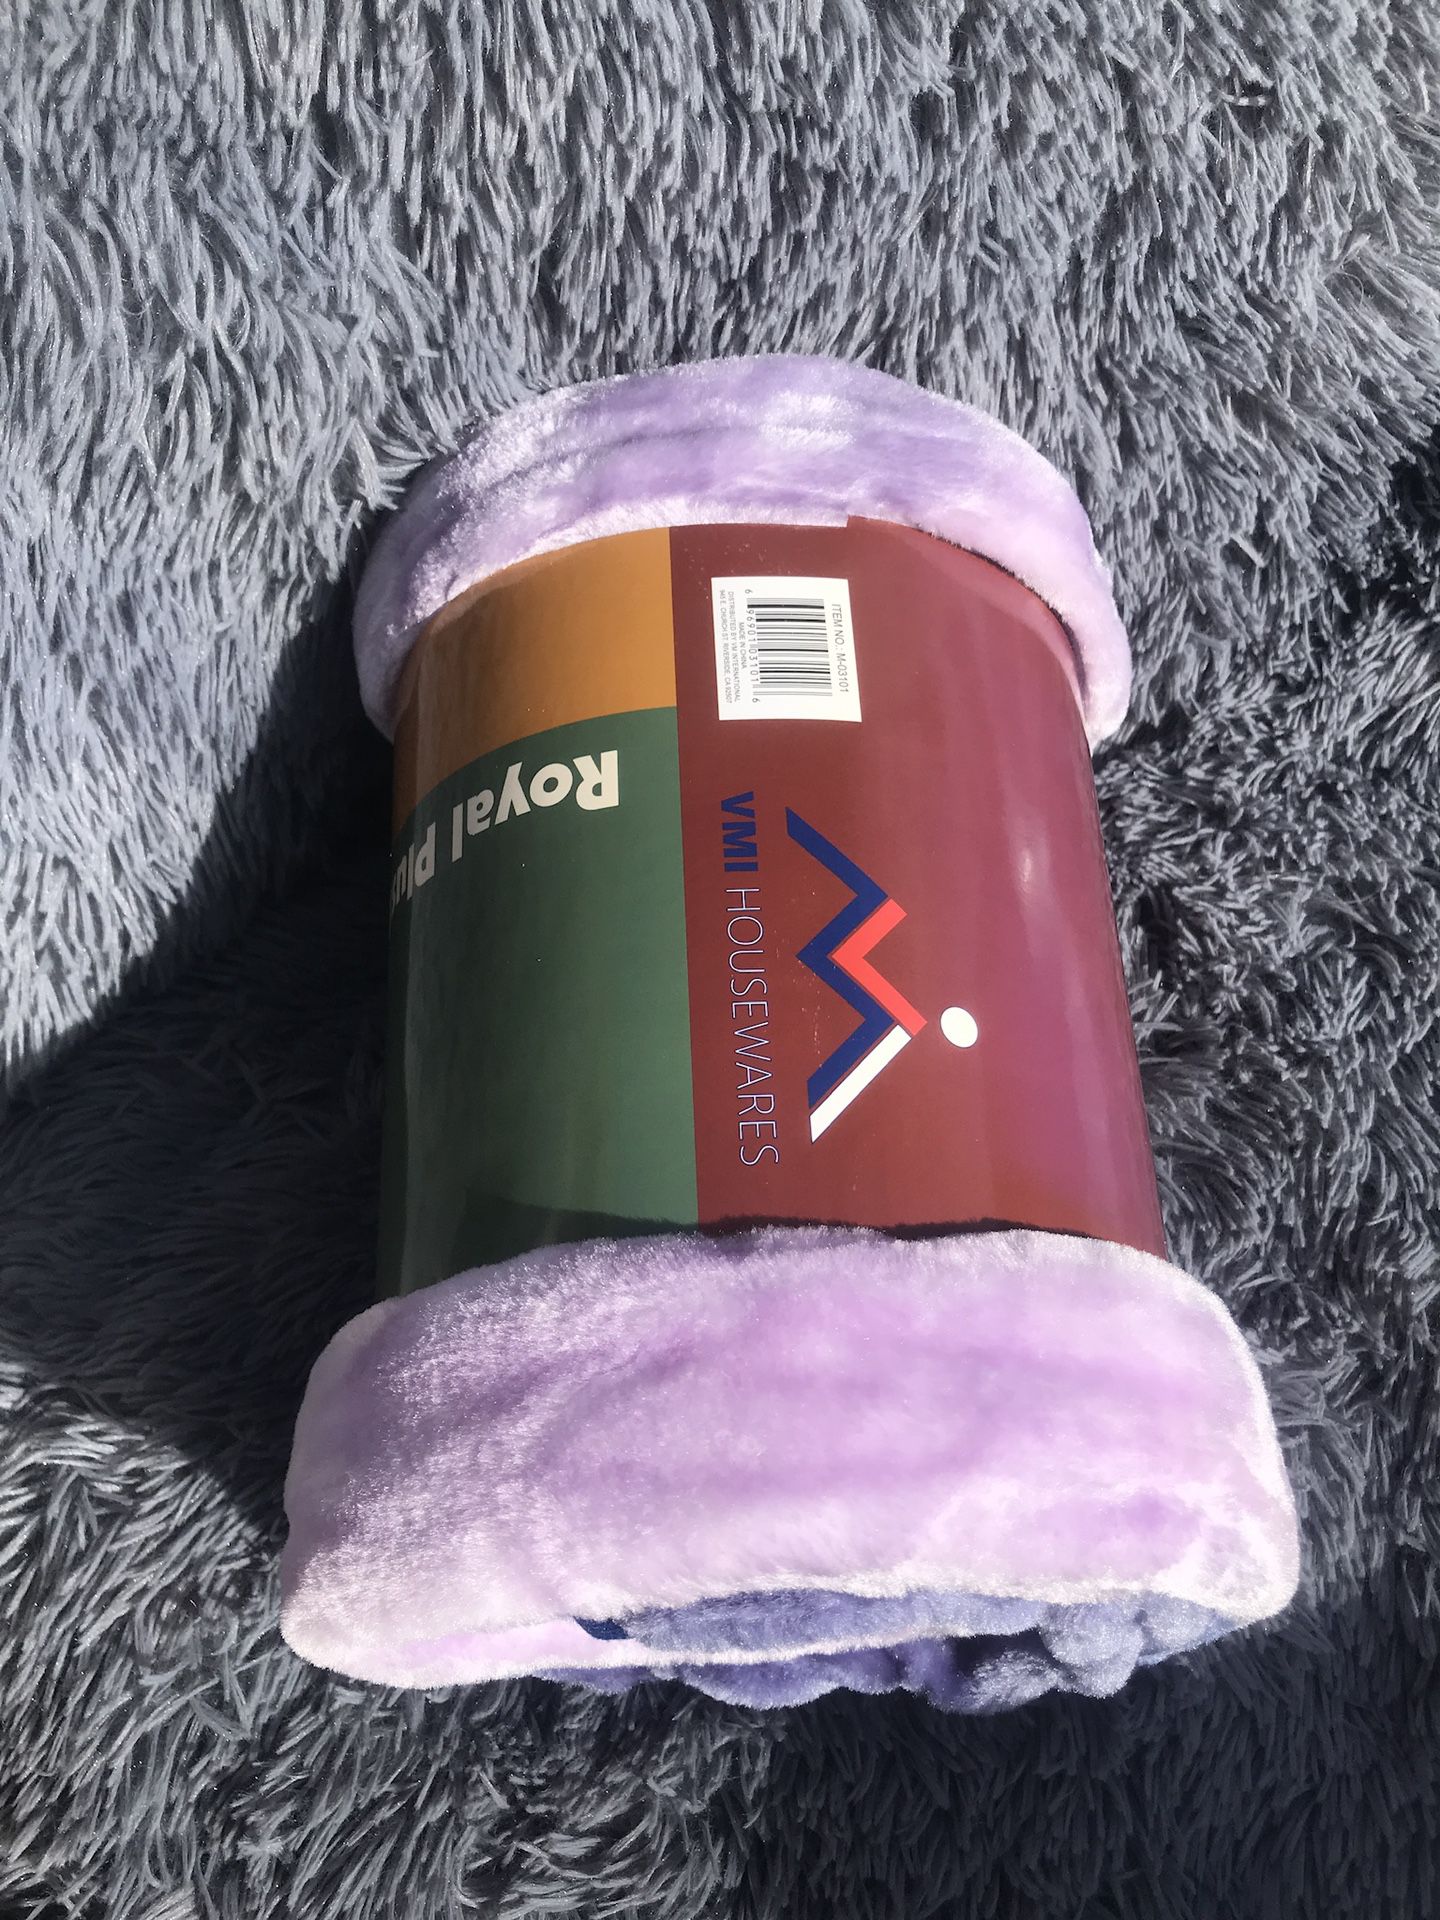 Blanket- Royal Plush Raschel Blanket Soft throw blue/ purple coyote 50" x 60" / 127x152cm -Wolf image New!!